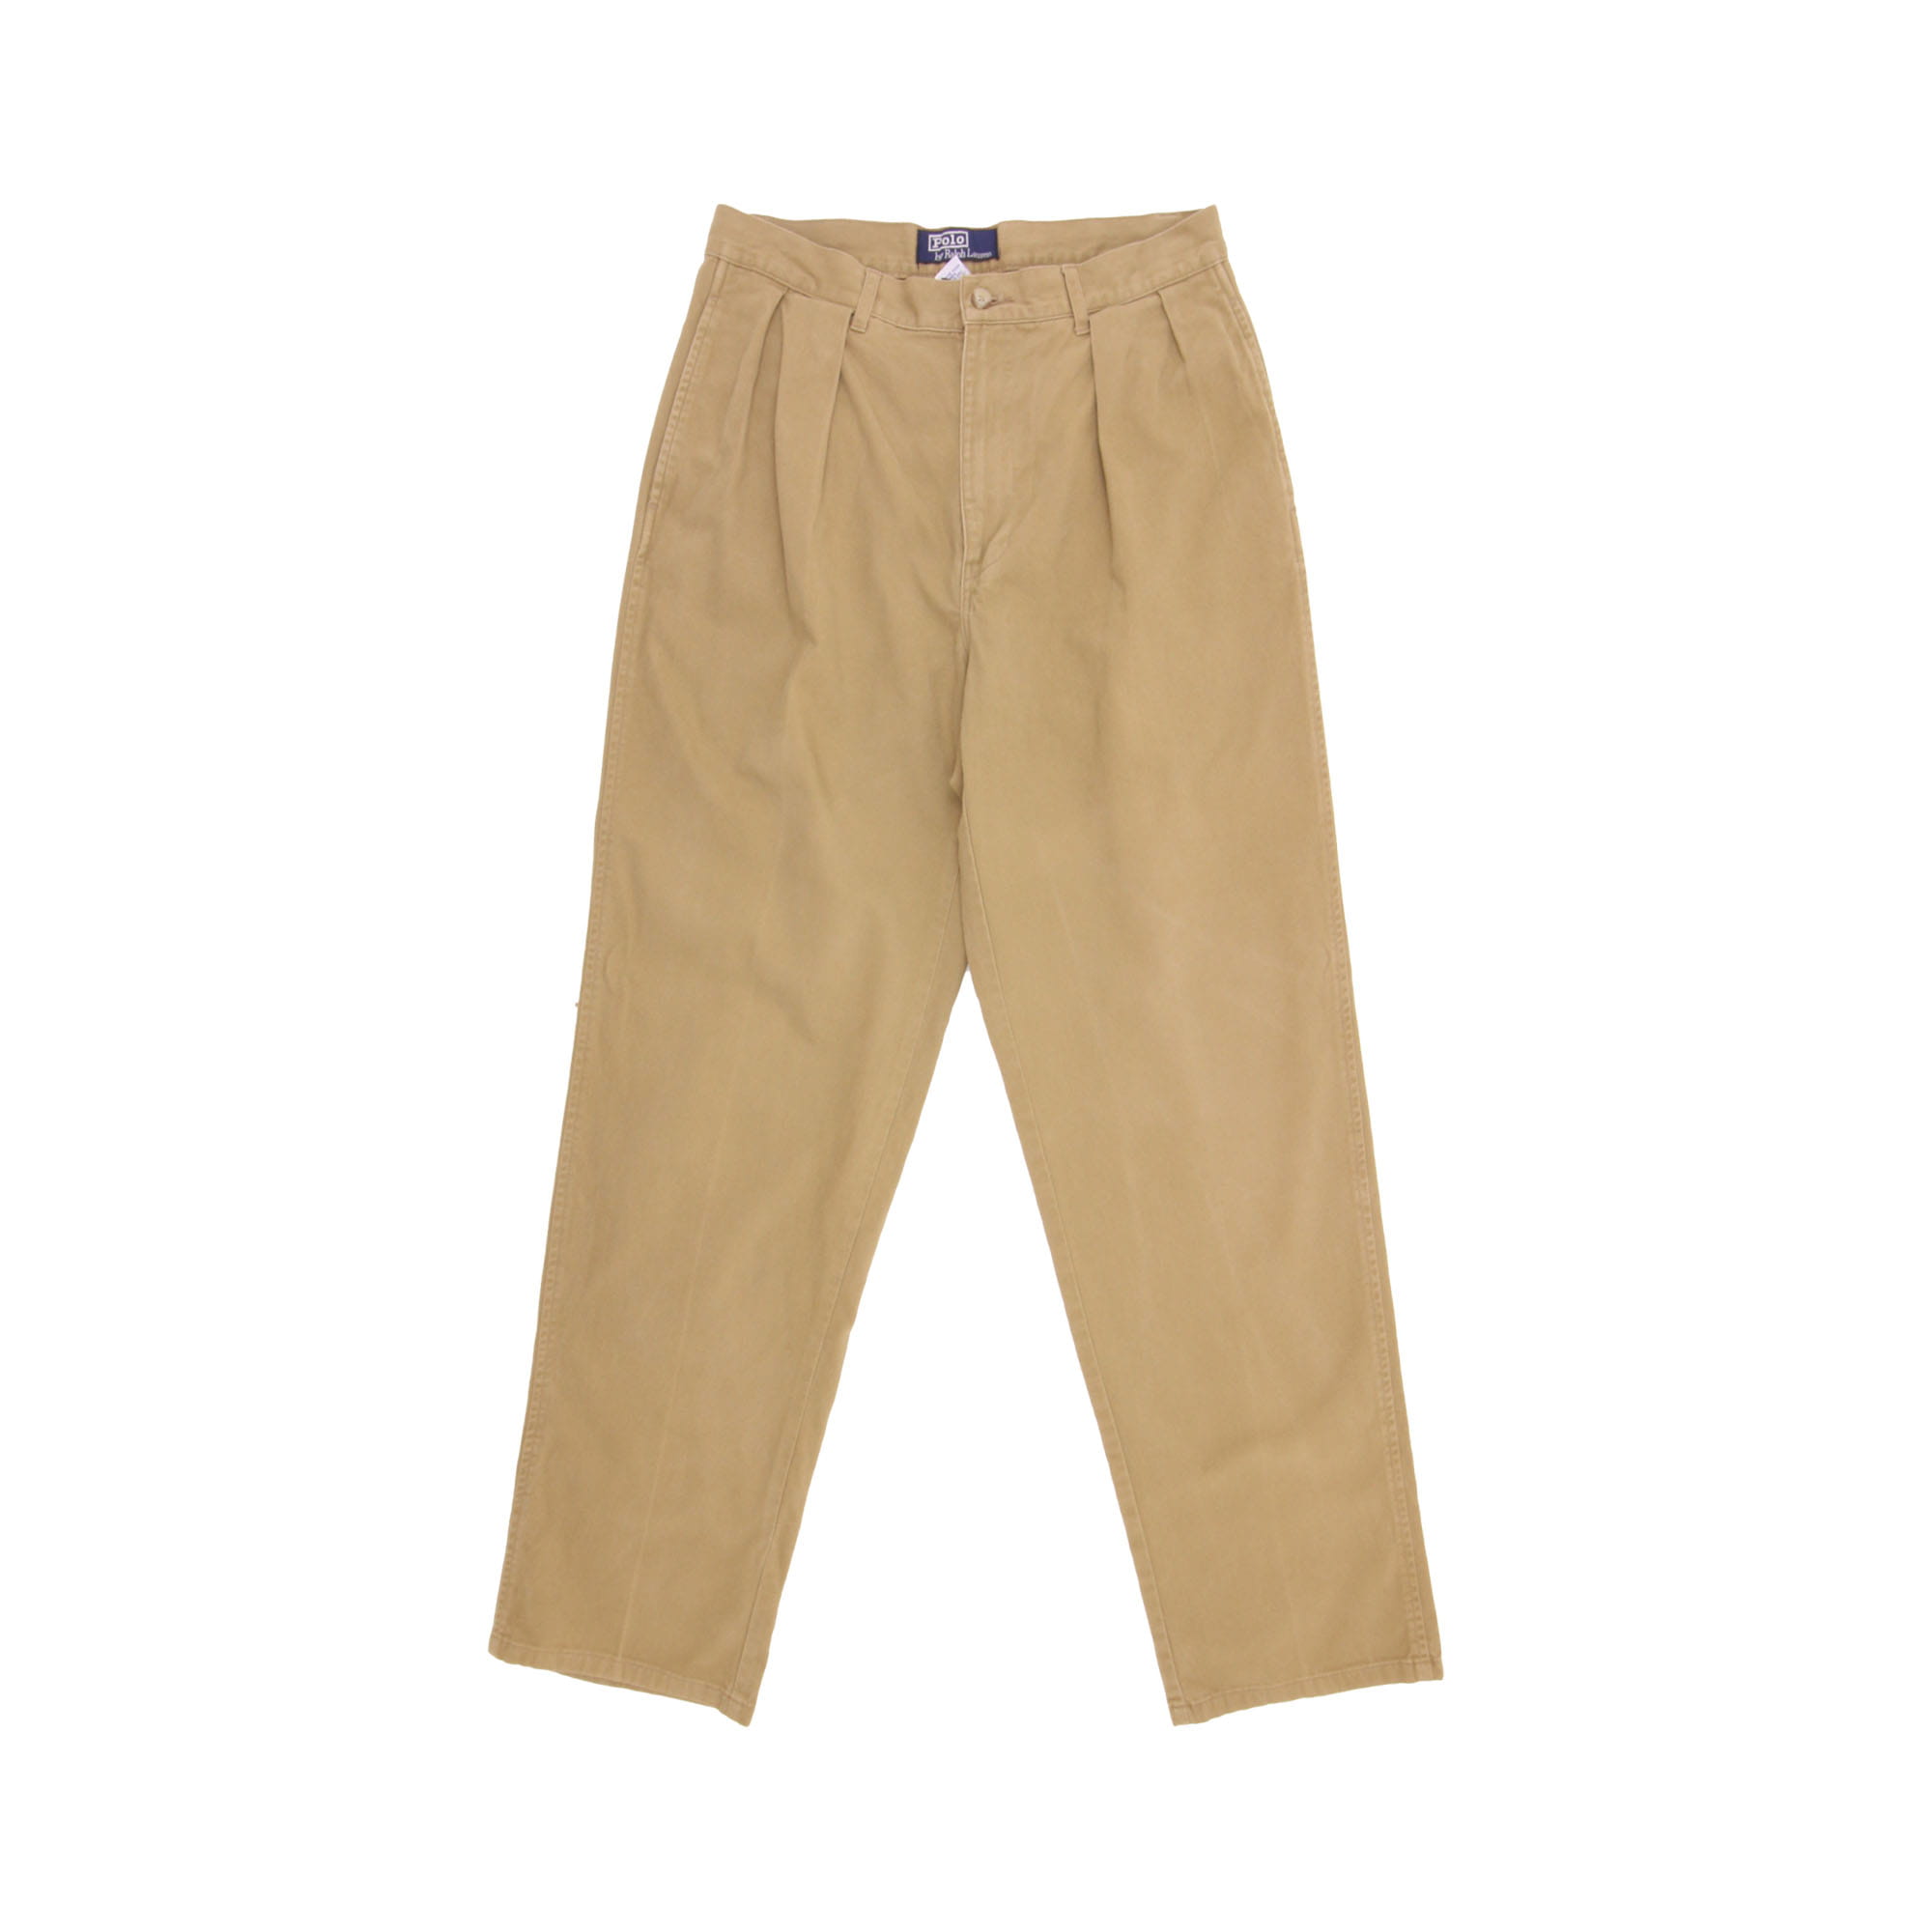 Polo Ralph Lauren Trousers - W30 L32